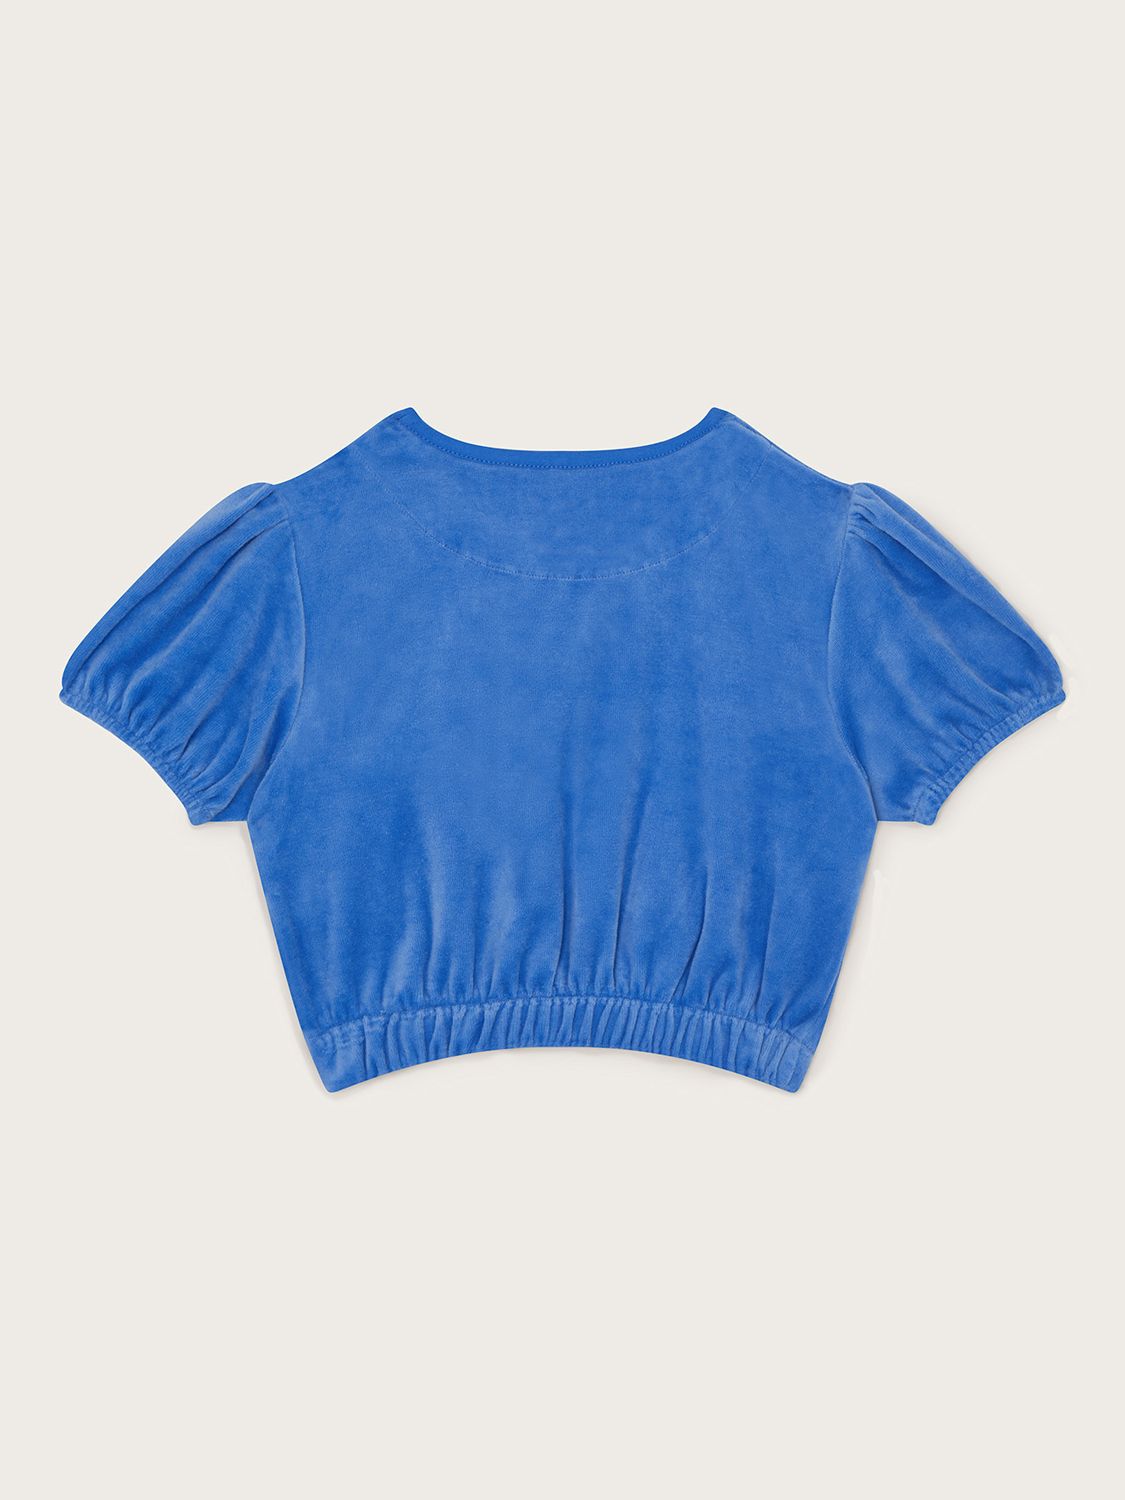 Monsoon Kids' Daisy Velour Puff Sleeve Top, Blue, 3-4 years